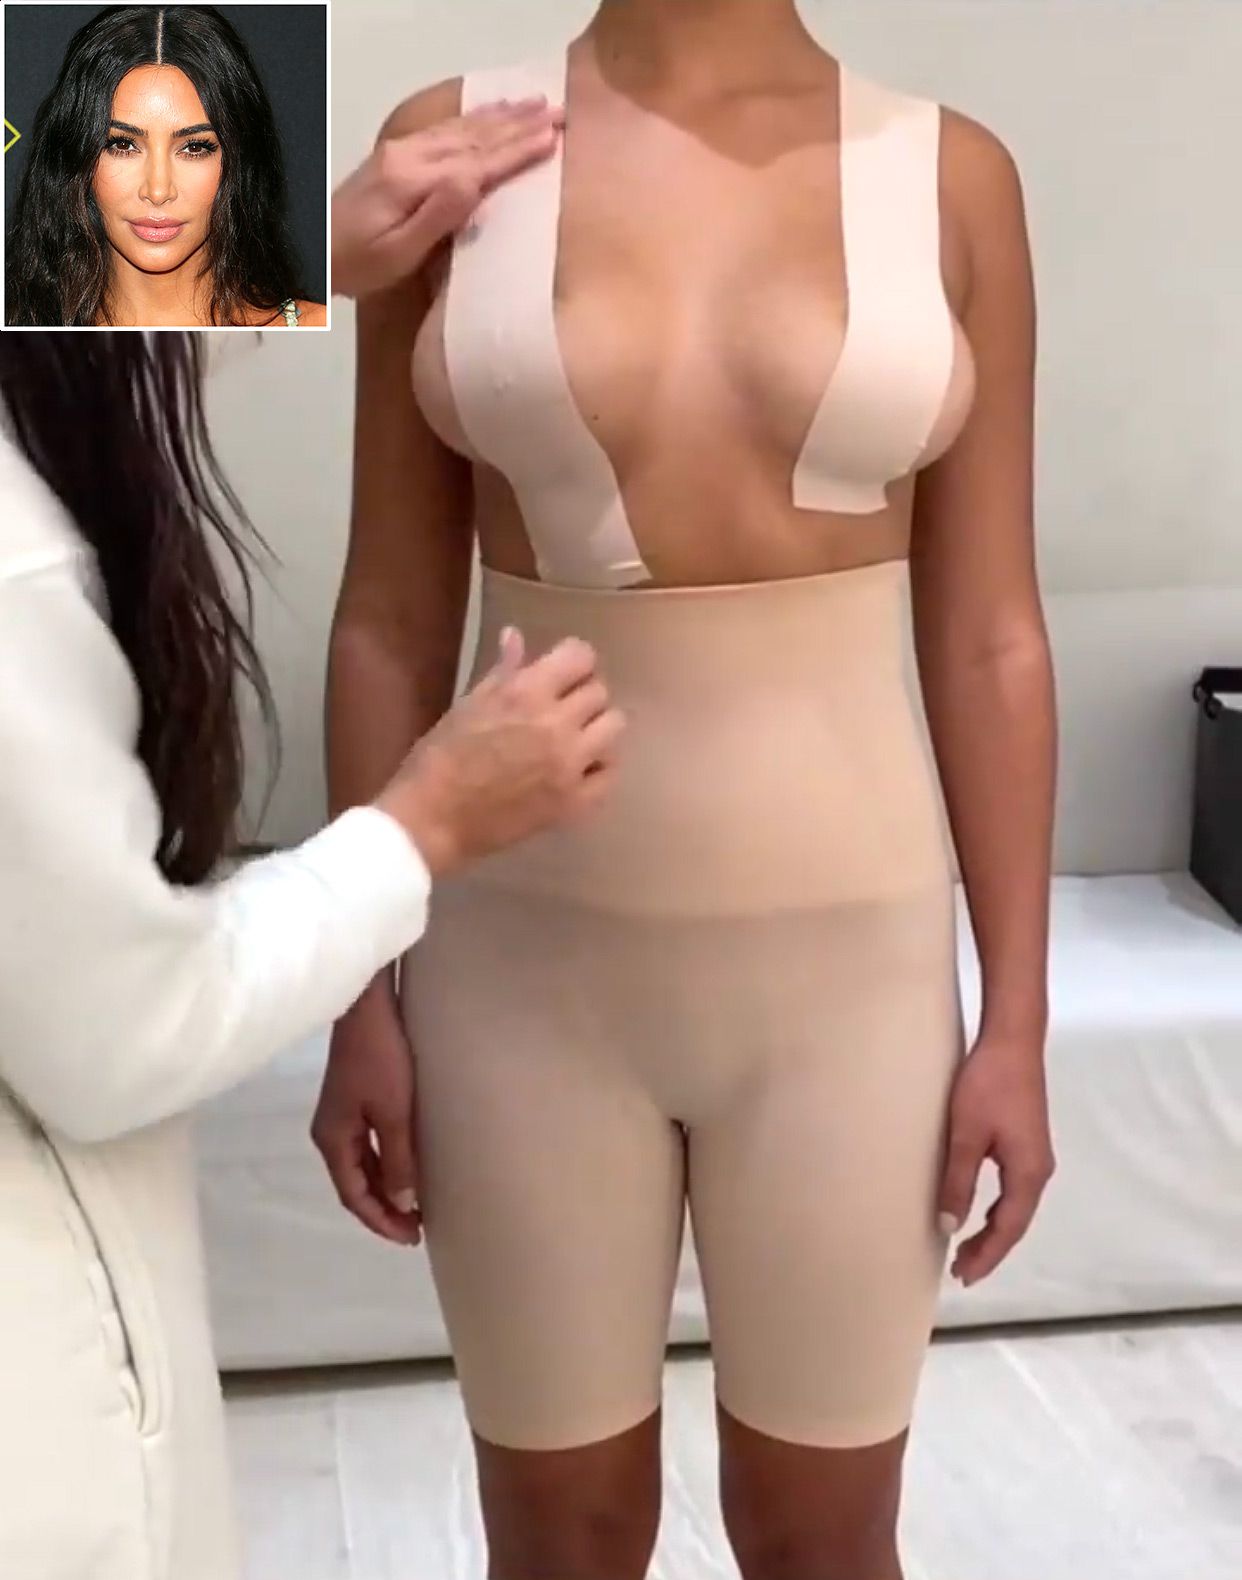 bud dunn recommends kim kardashian huge tits pic